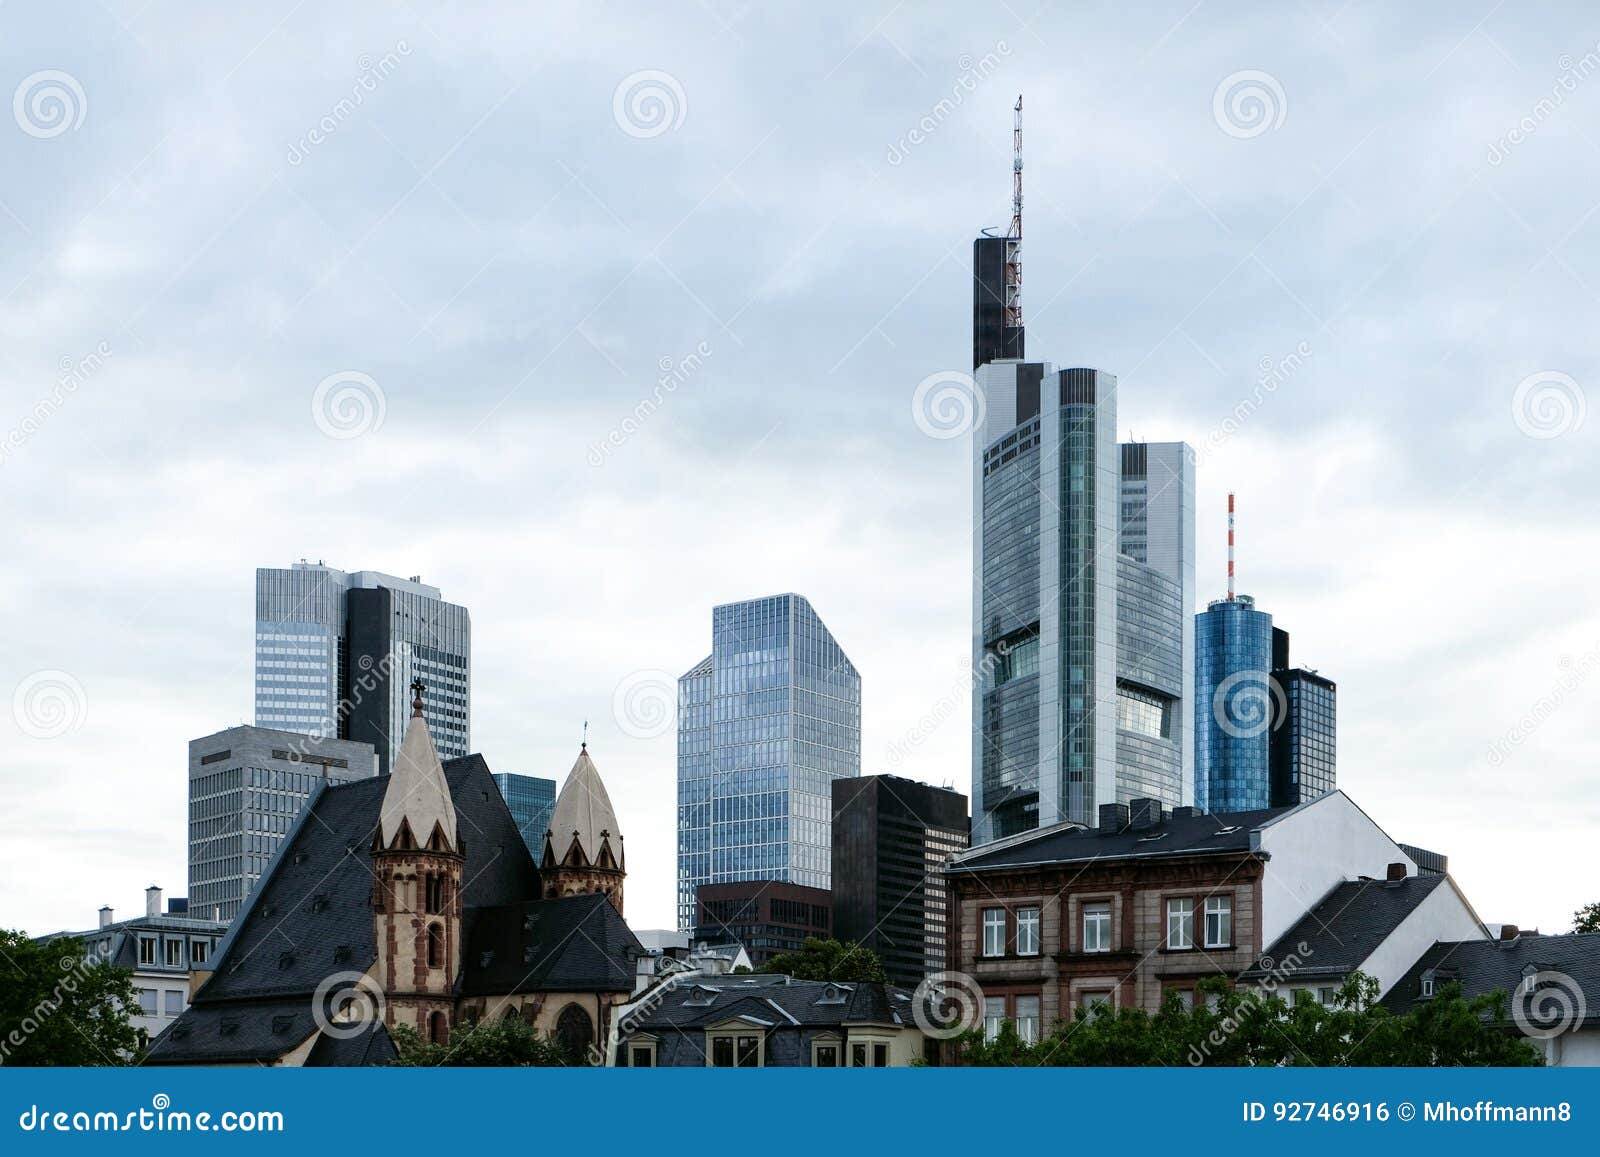 skyline with skyscrapers - frankfurt am main, germany, financial district